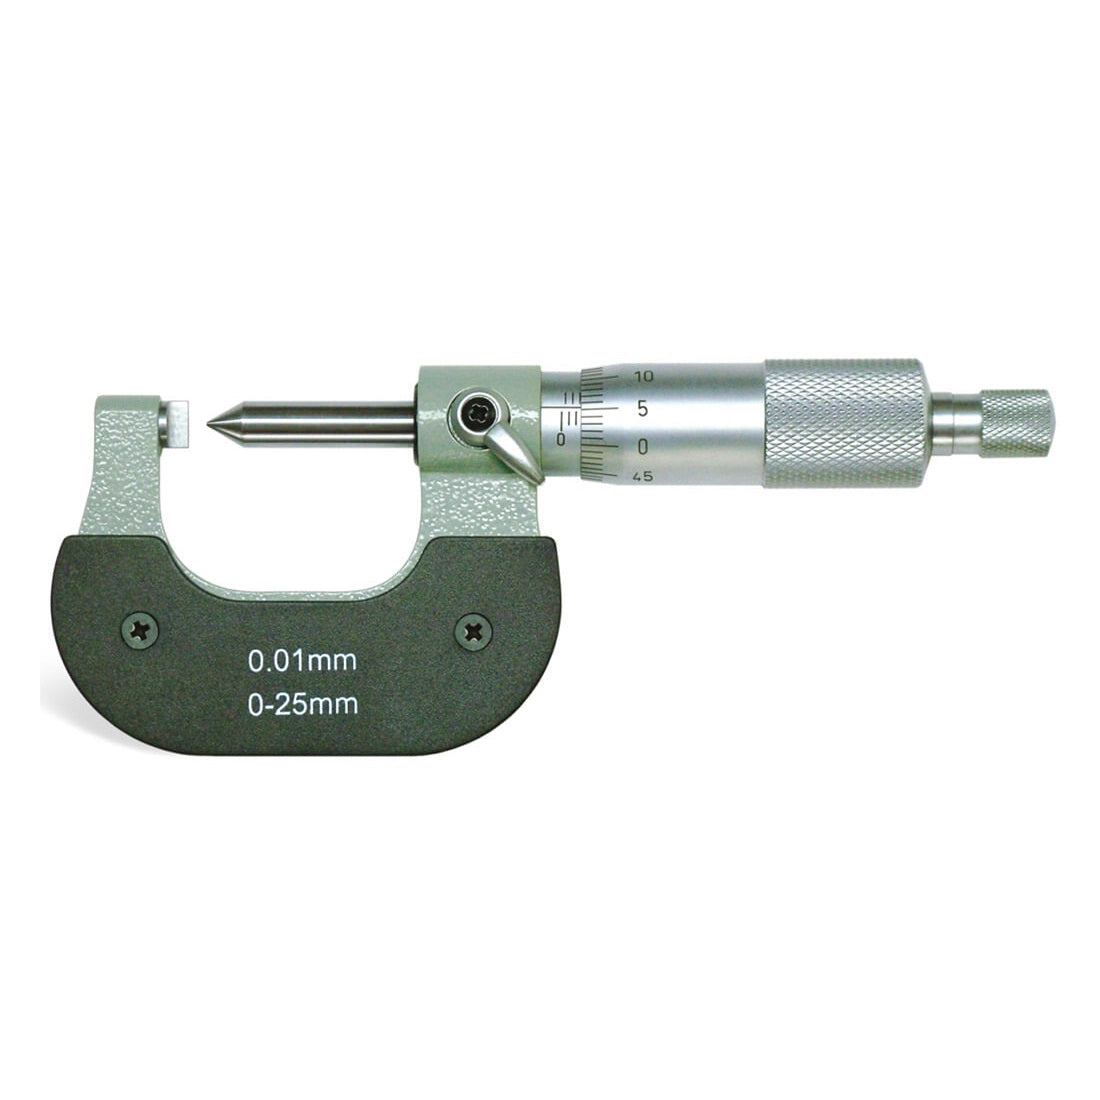 Yamayo Crimp Height Micrometer 0-25mm 326-025